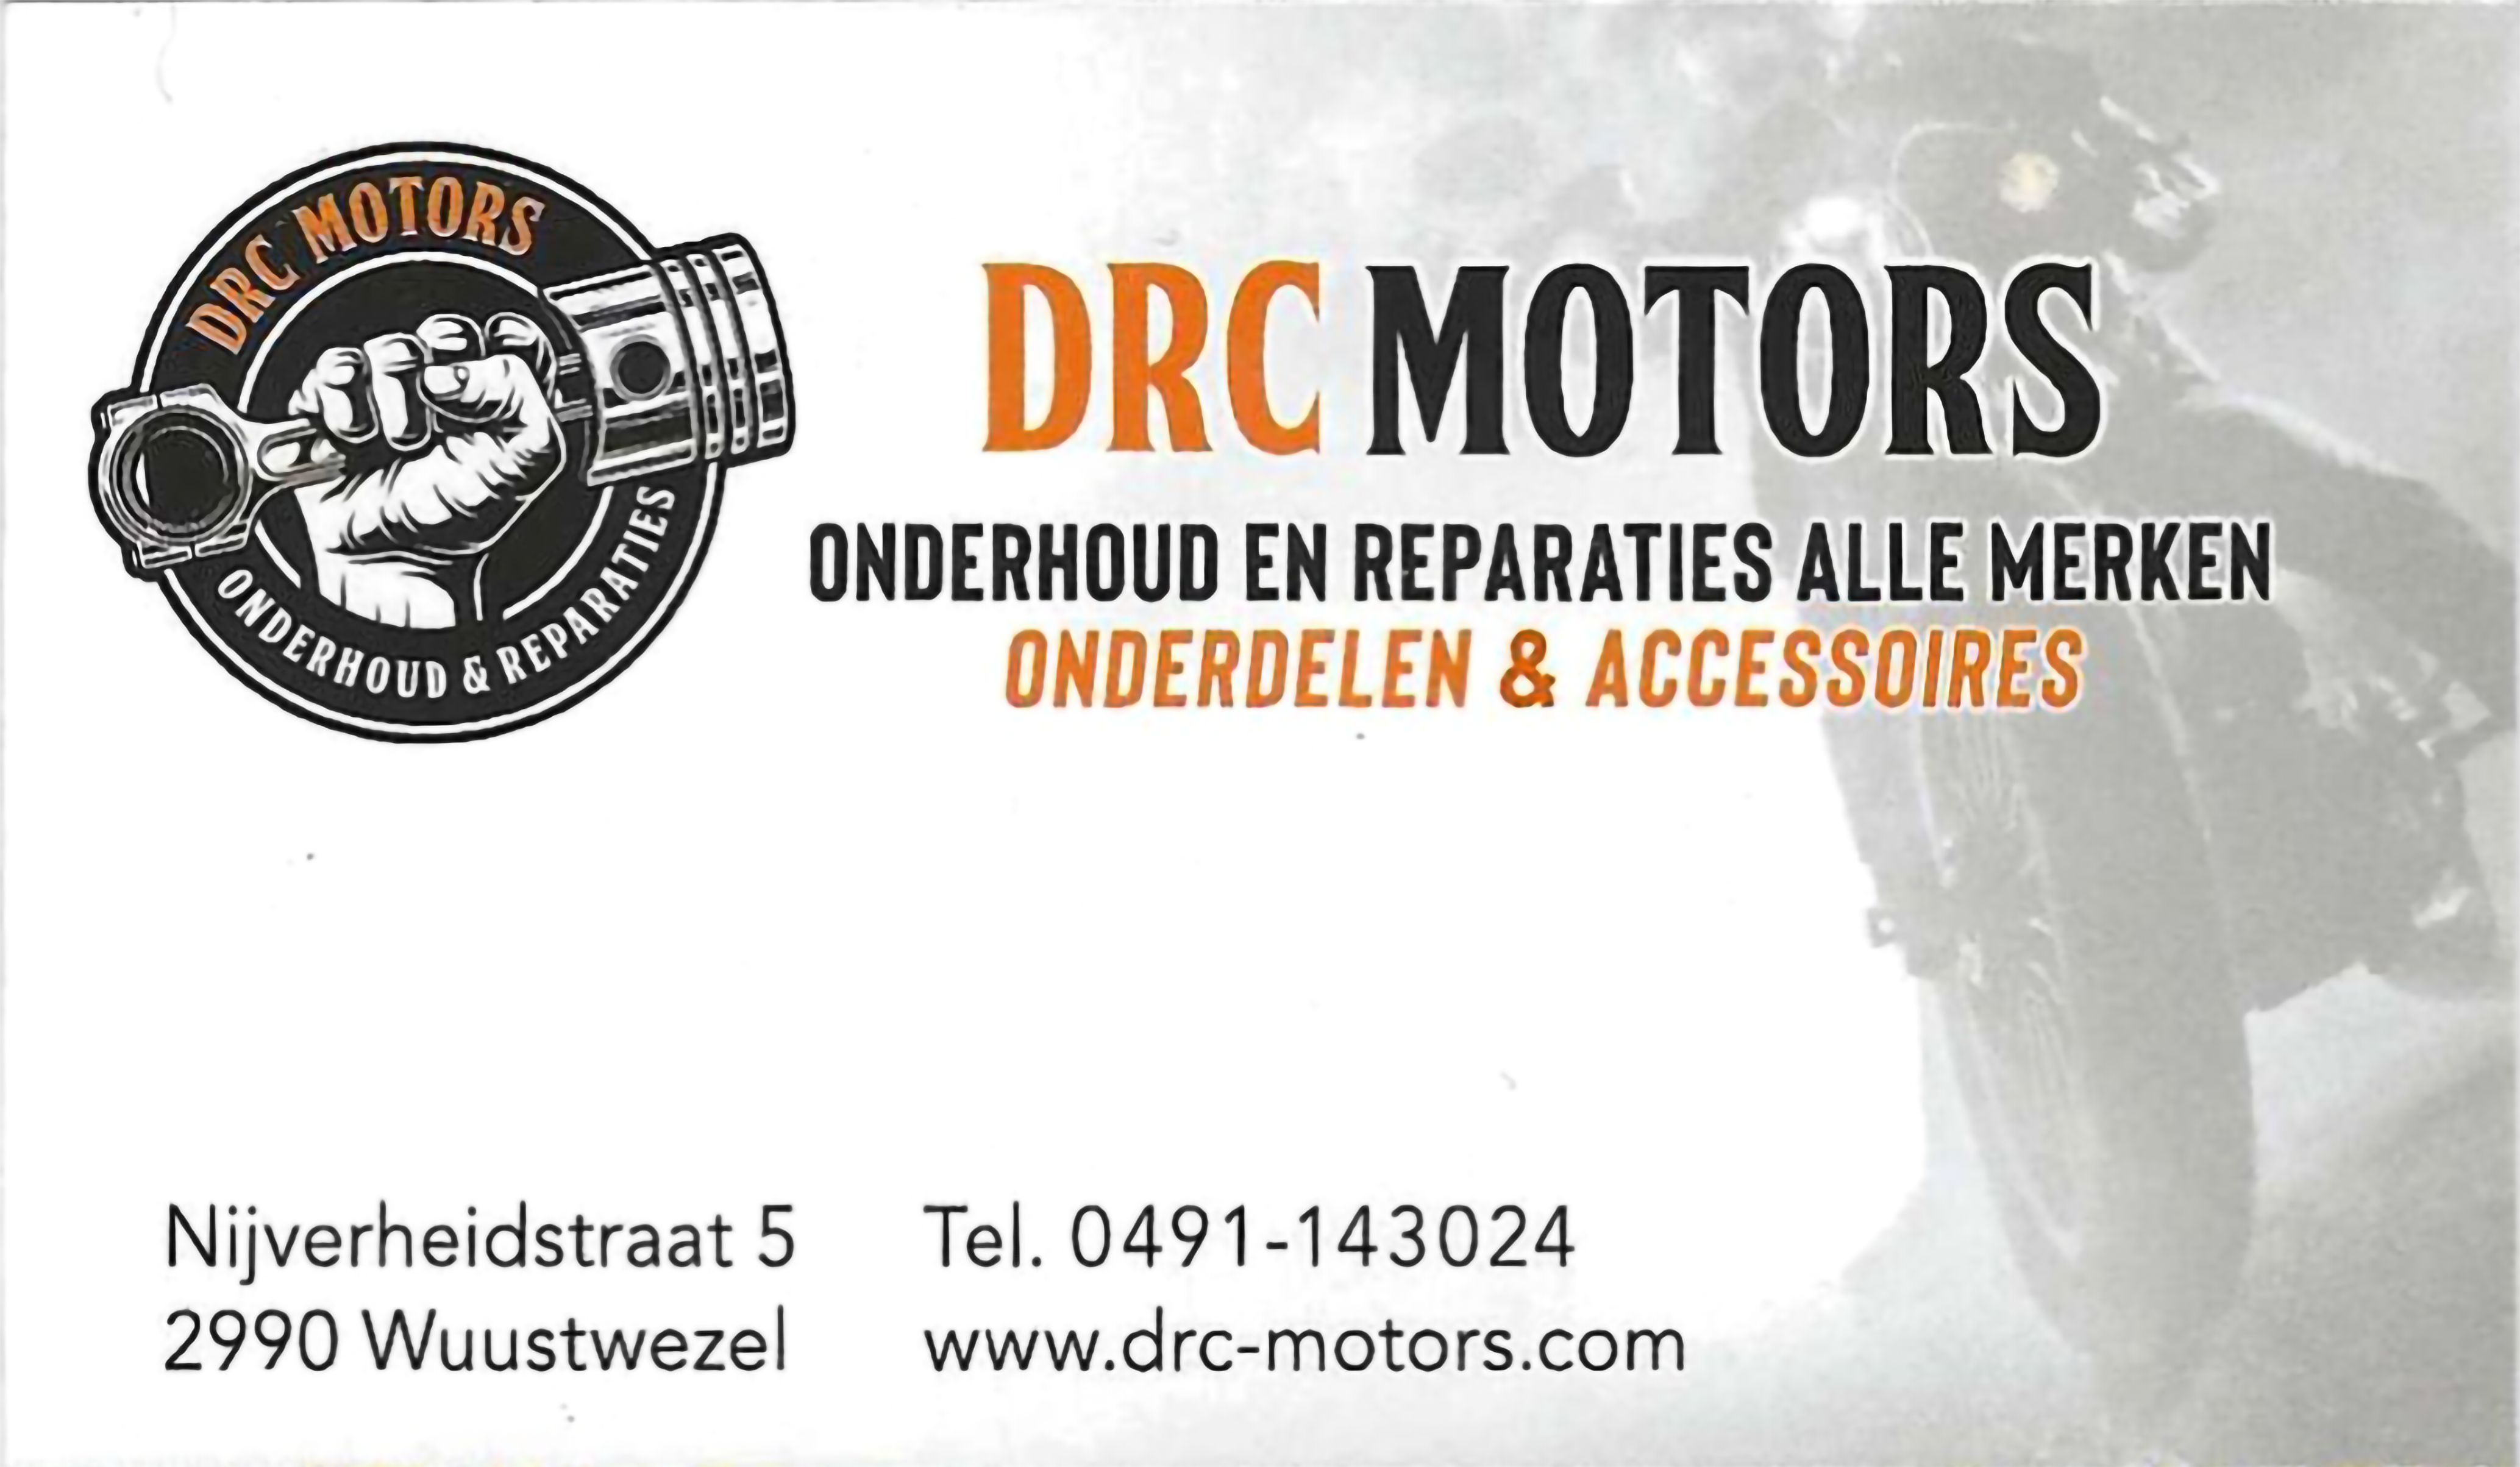 DRC motors